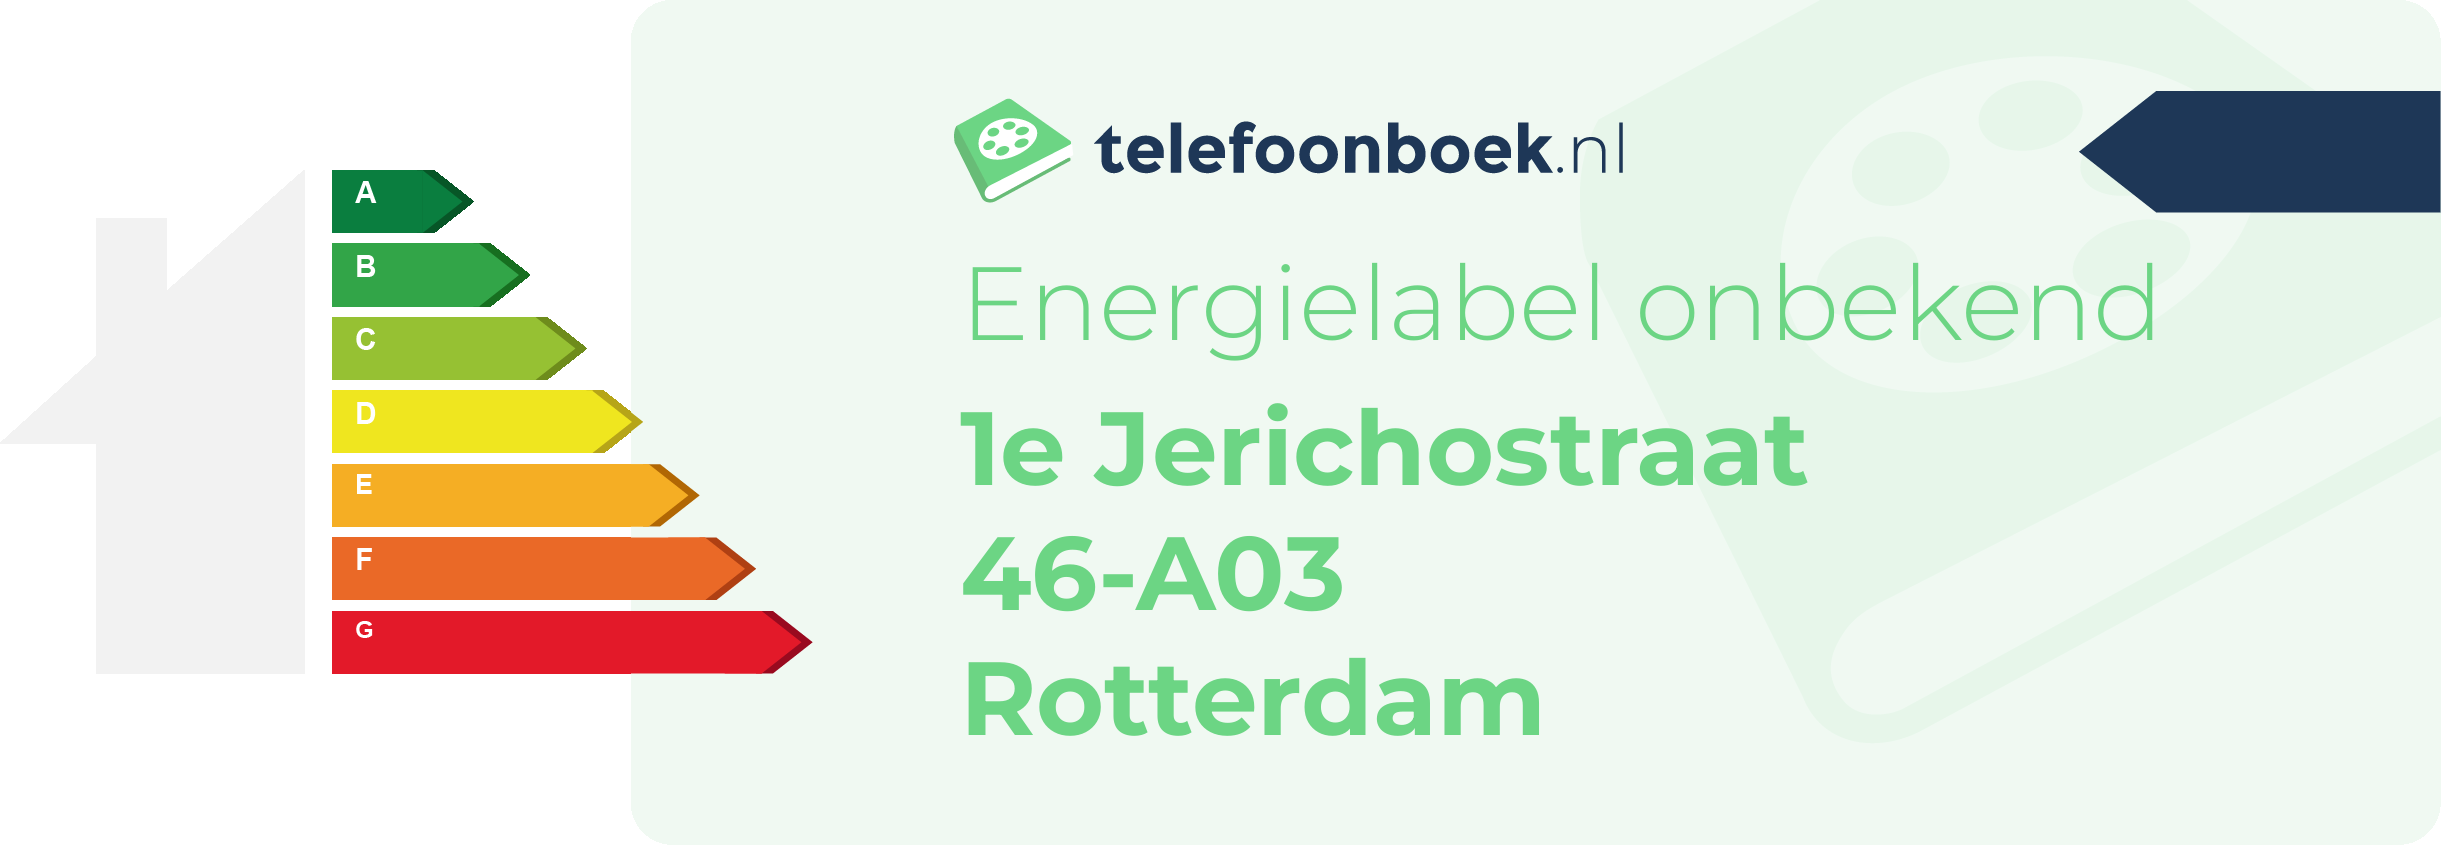 Energielabel 1e Jerichostraat 46-A03 Rotterdam